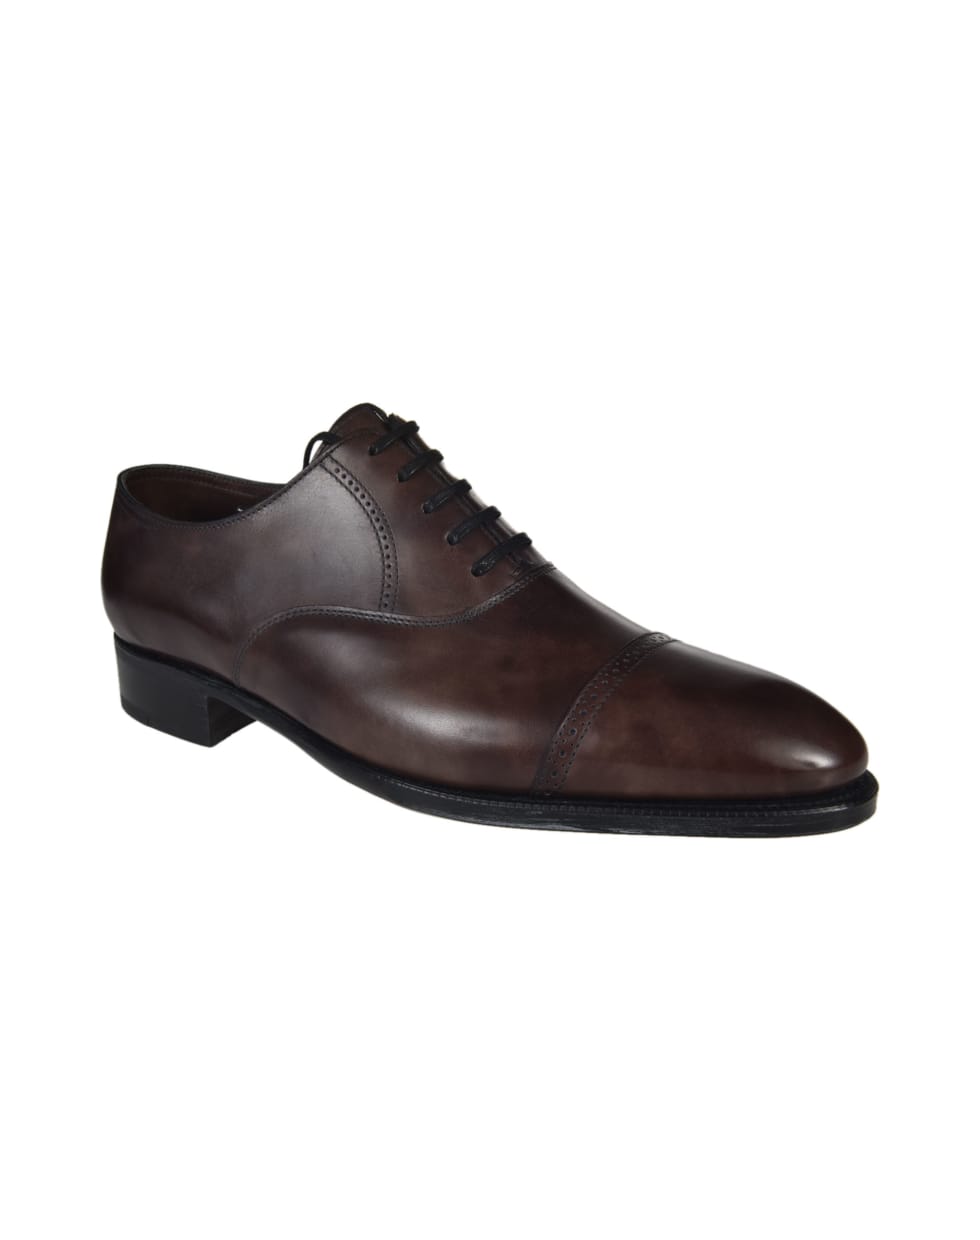 John Lobb Philip II Oxford Shoes - Brown